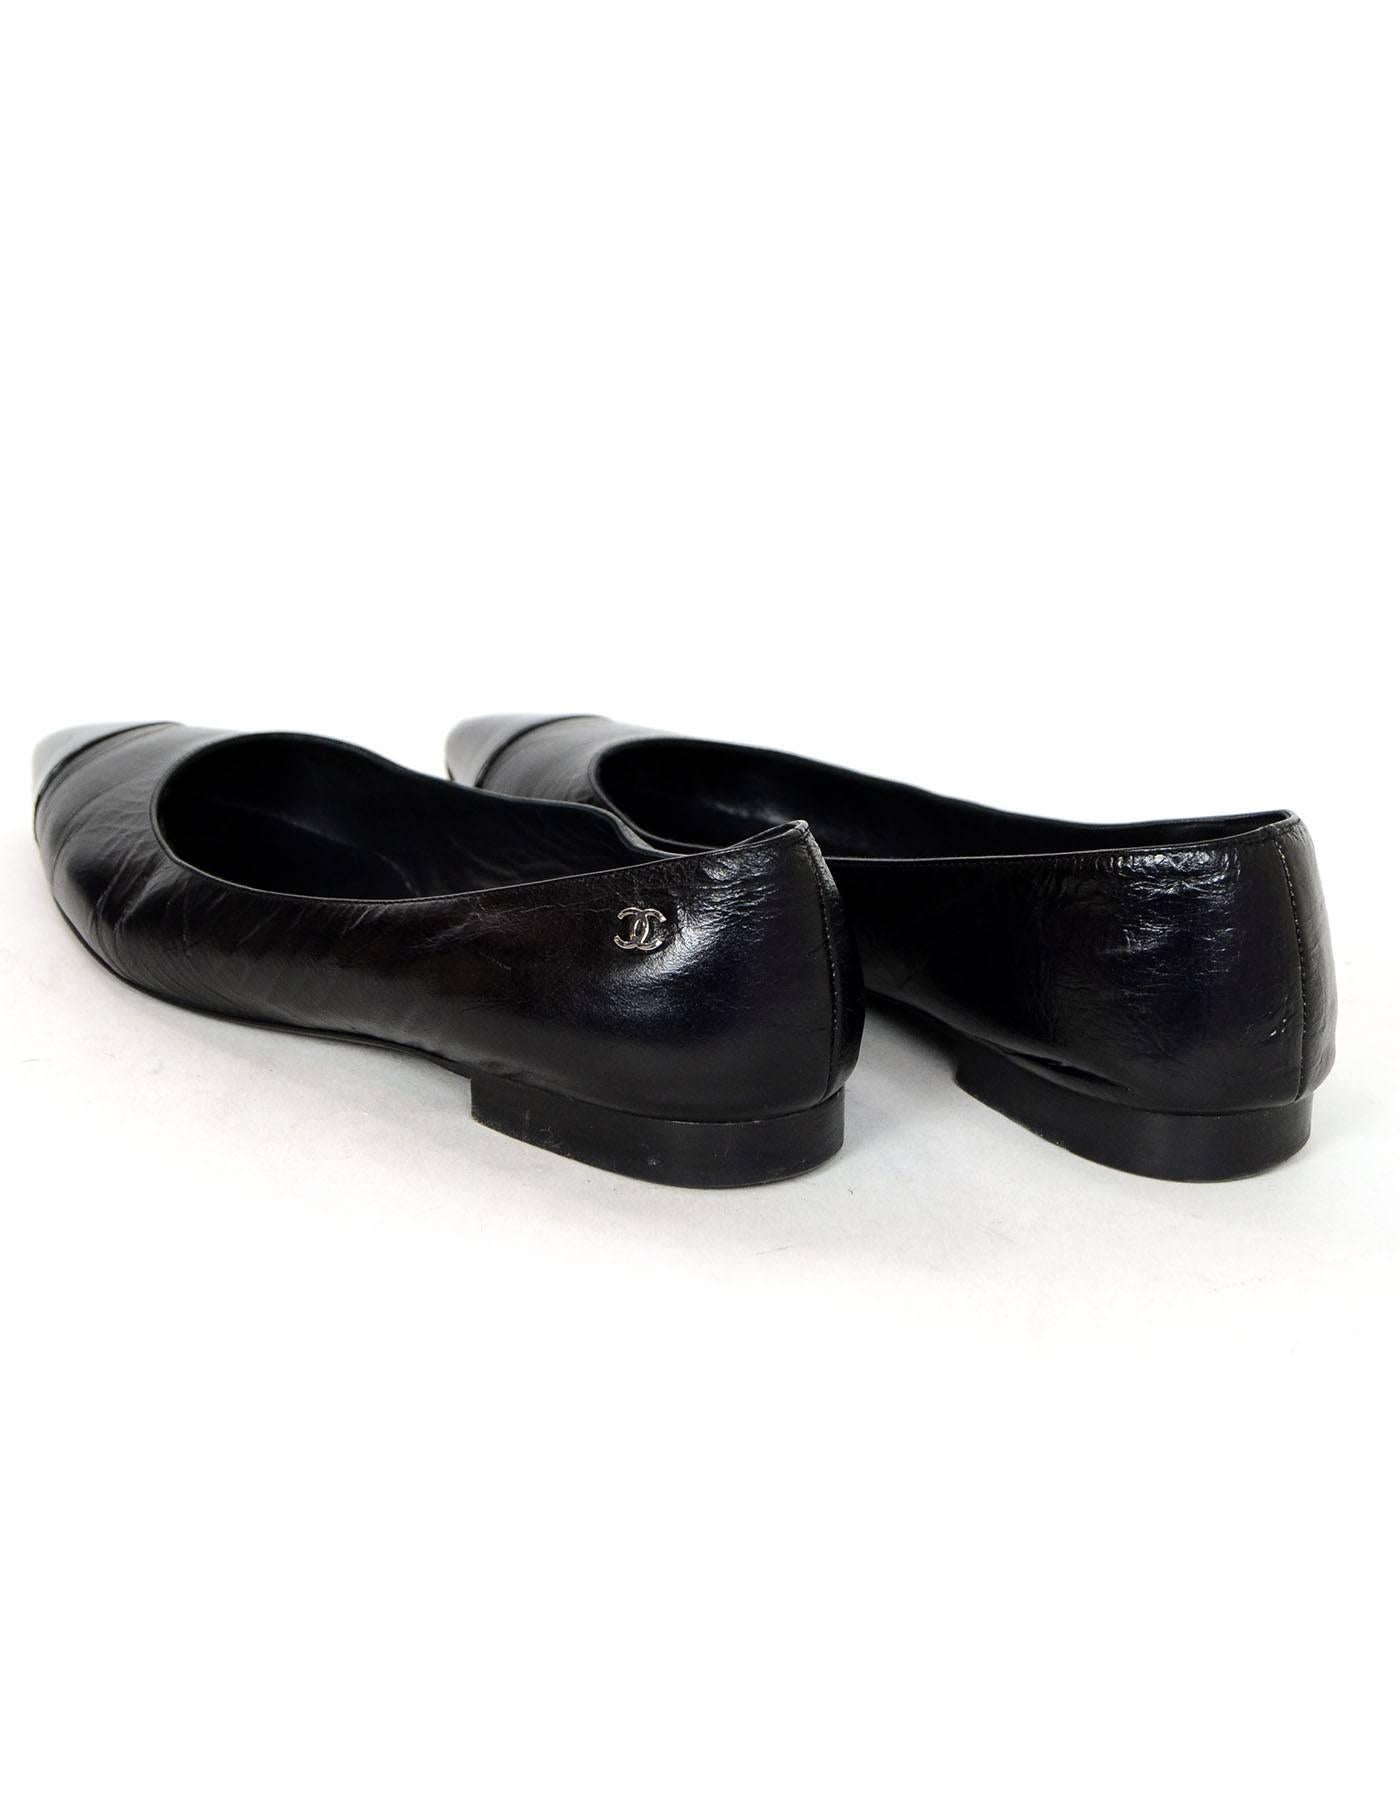 Women's Chanel Black Leather & Patent Cap-Toe Flats Sz 40.5